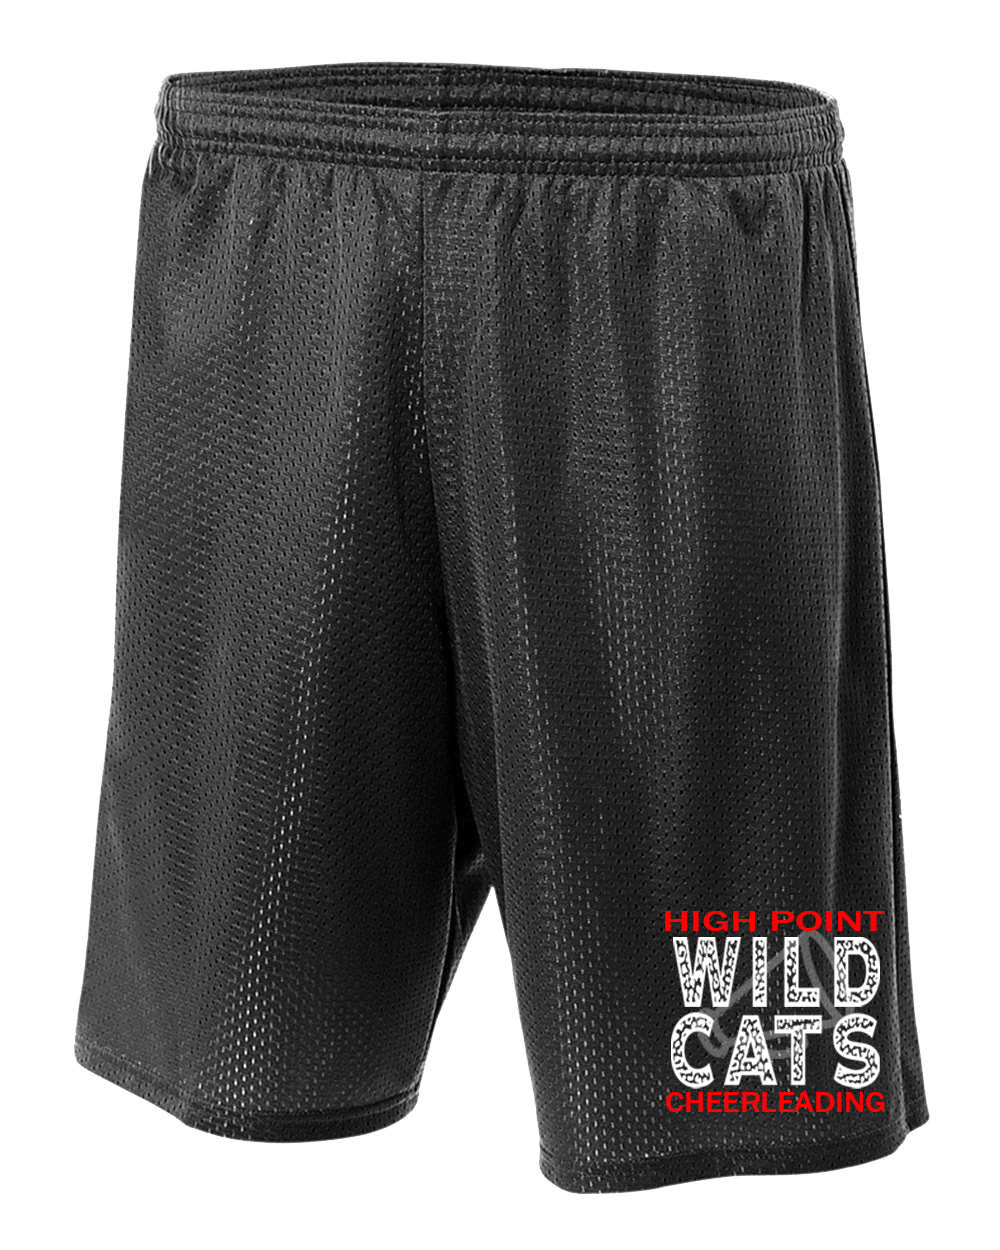 Wildcats Cheer Design 1 Mesh Shorts